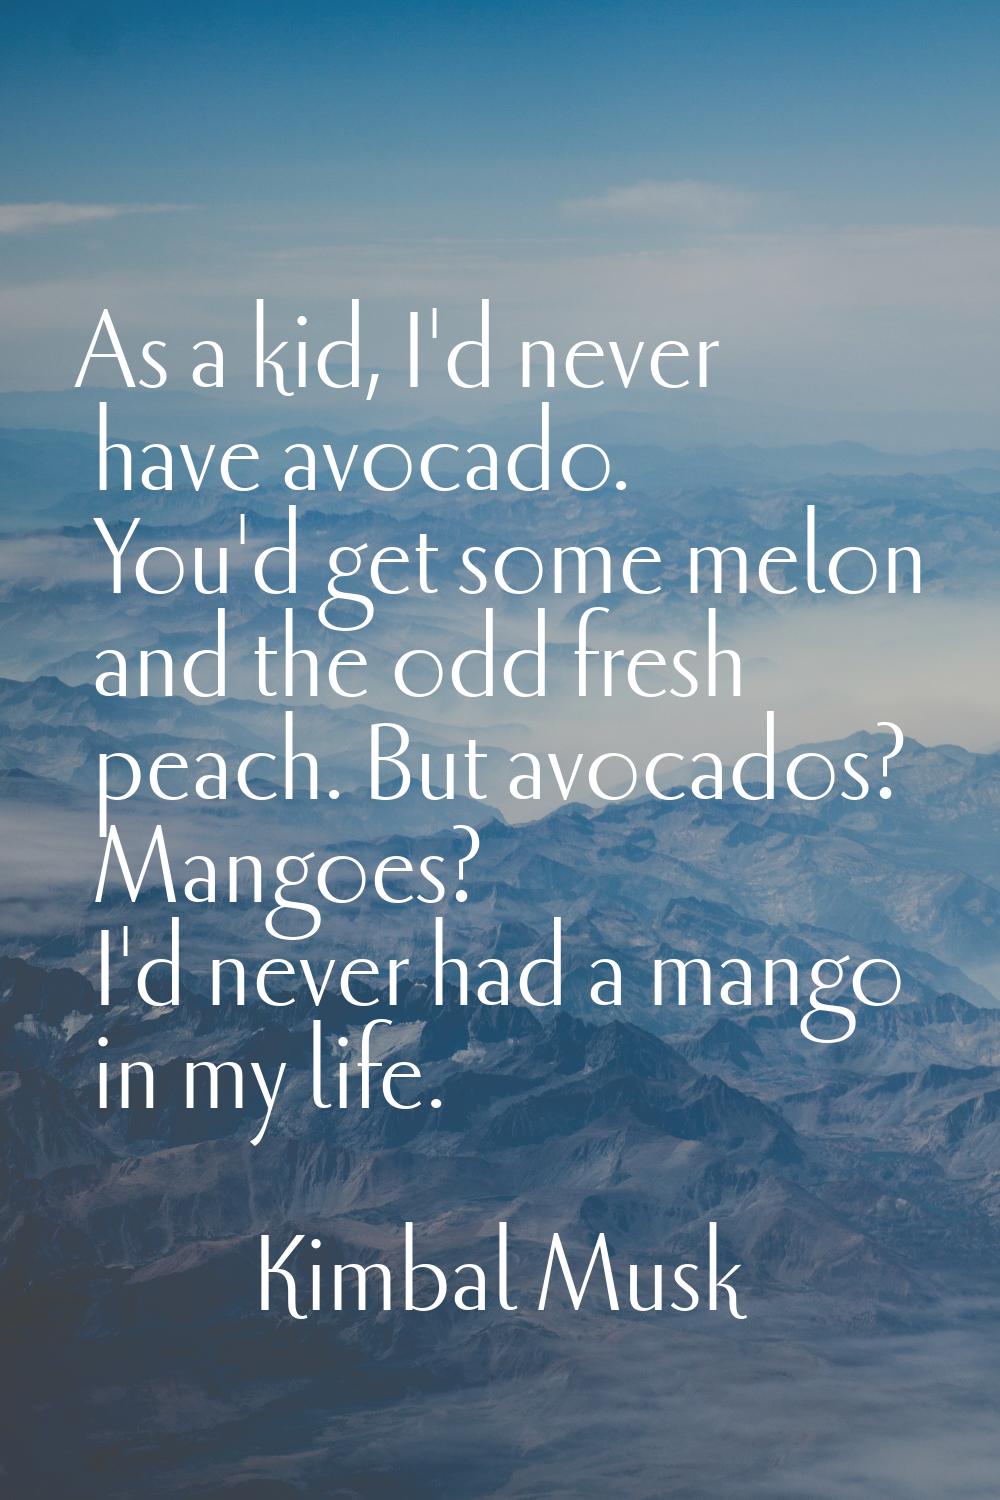 As a kid, I'd never have avocado. You'd get some melon and the odd fresh peach. But avocados? Mango